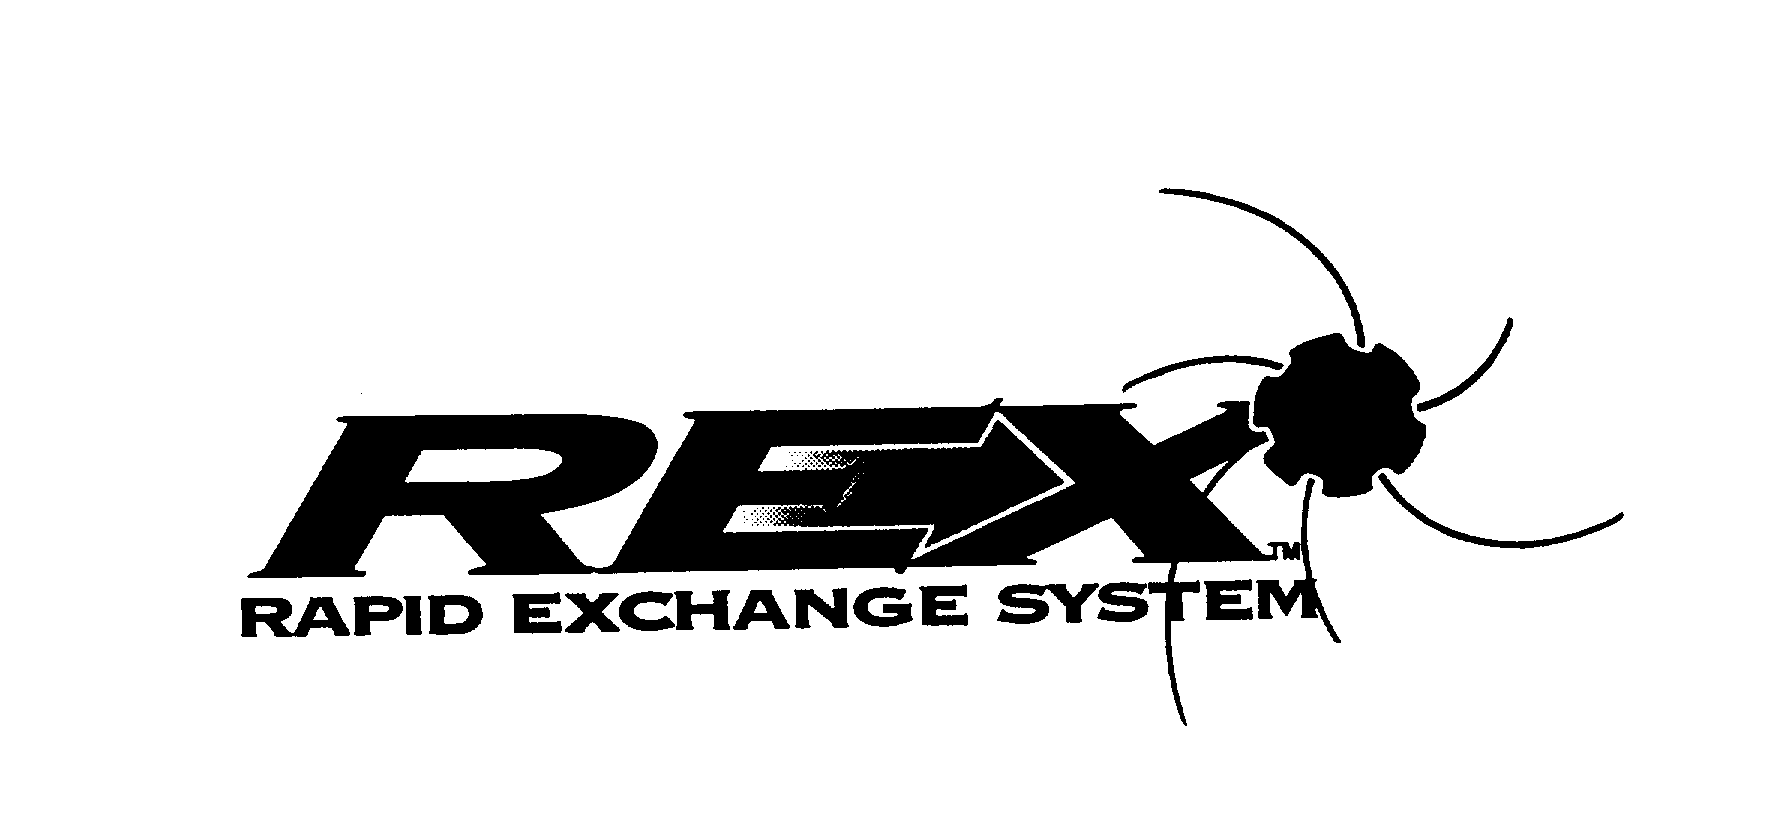  REX RAPID EXCHANGE SYSTEM